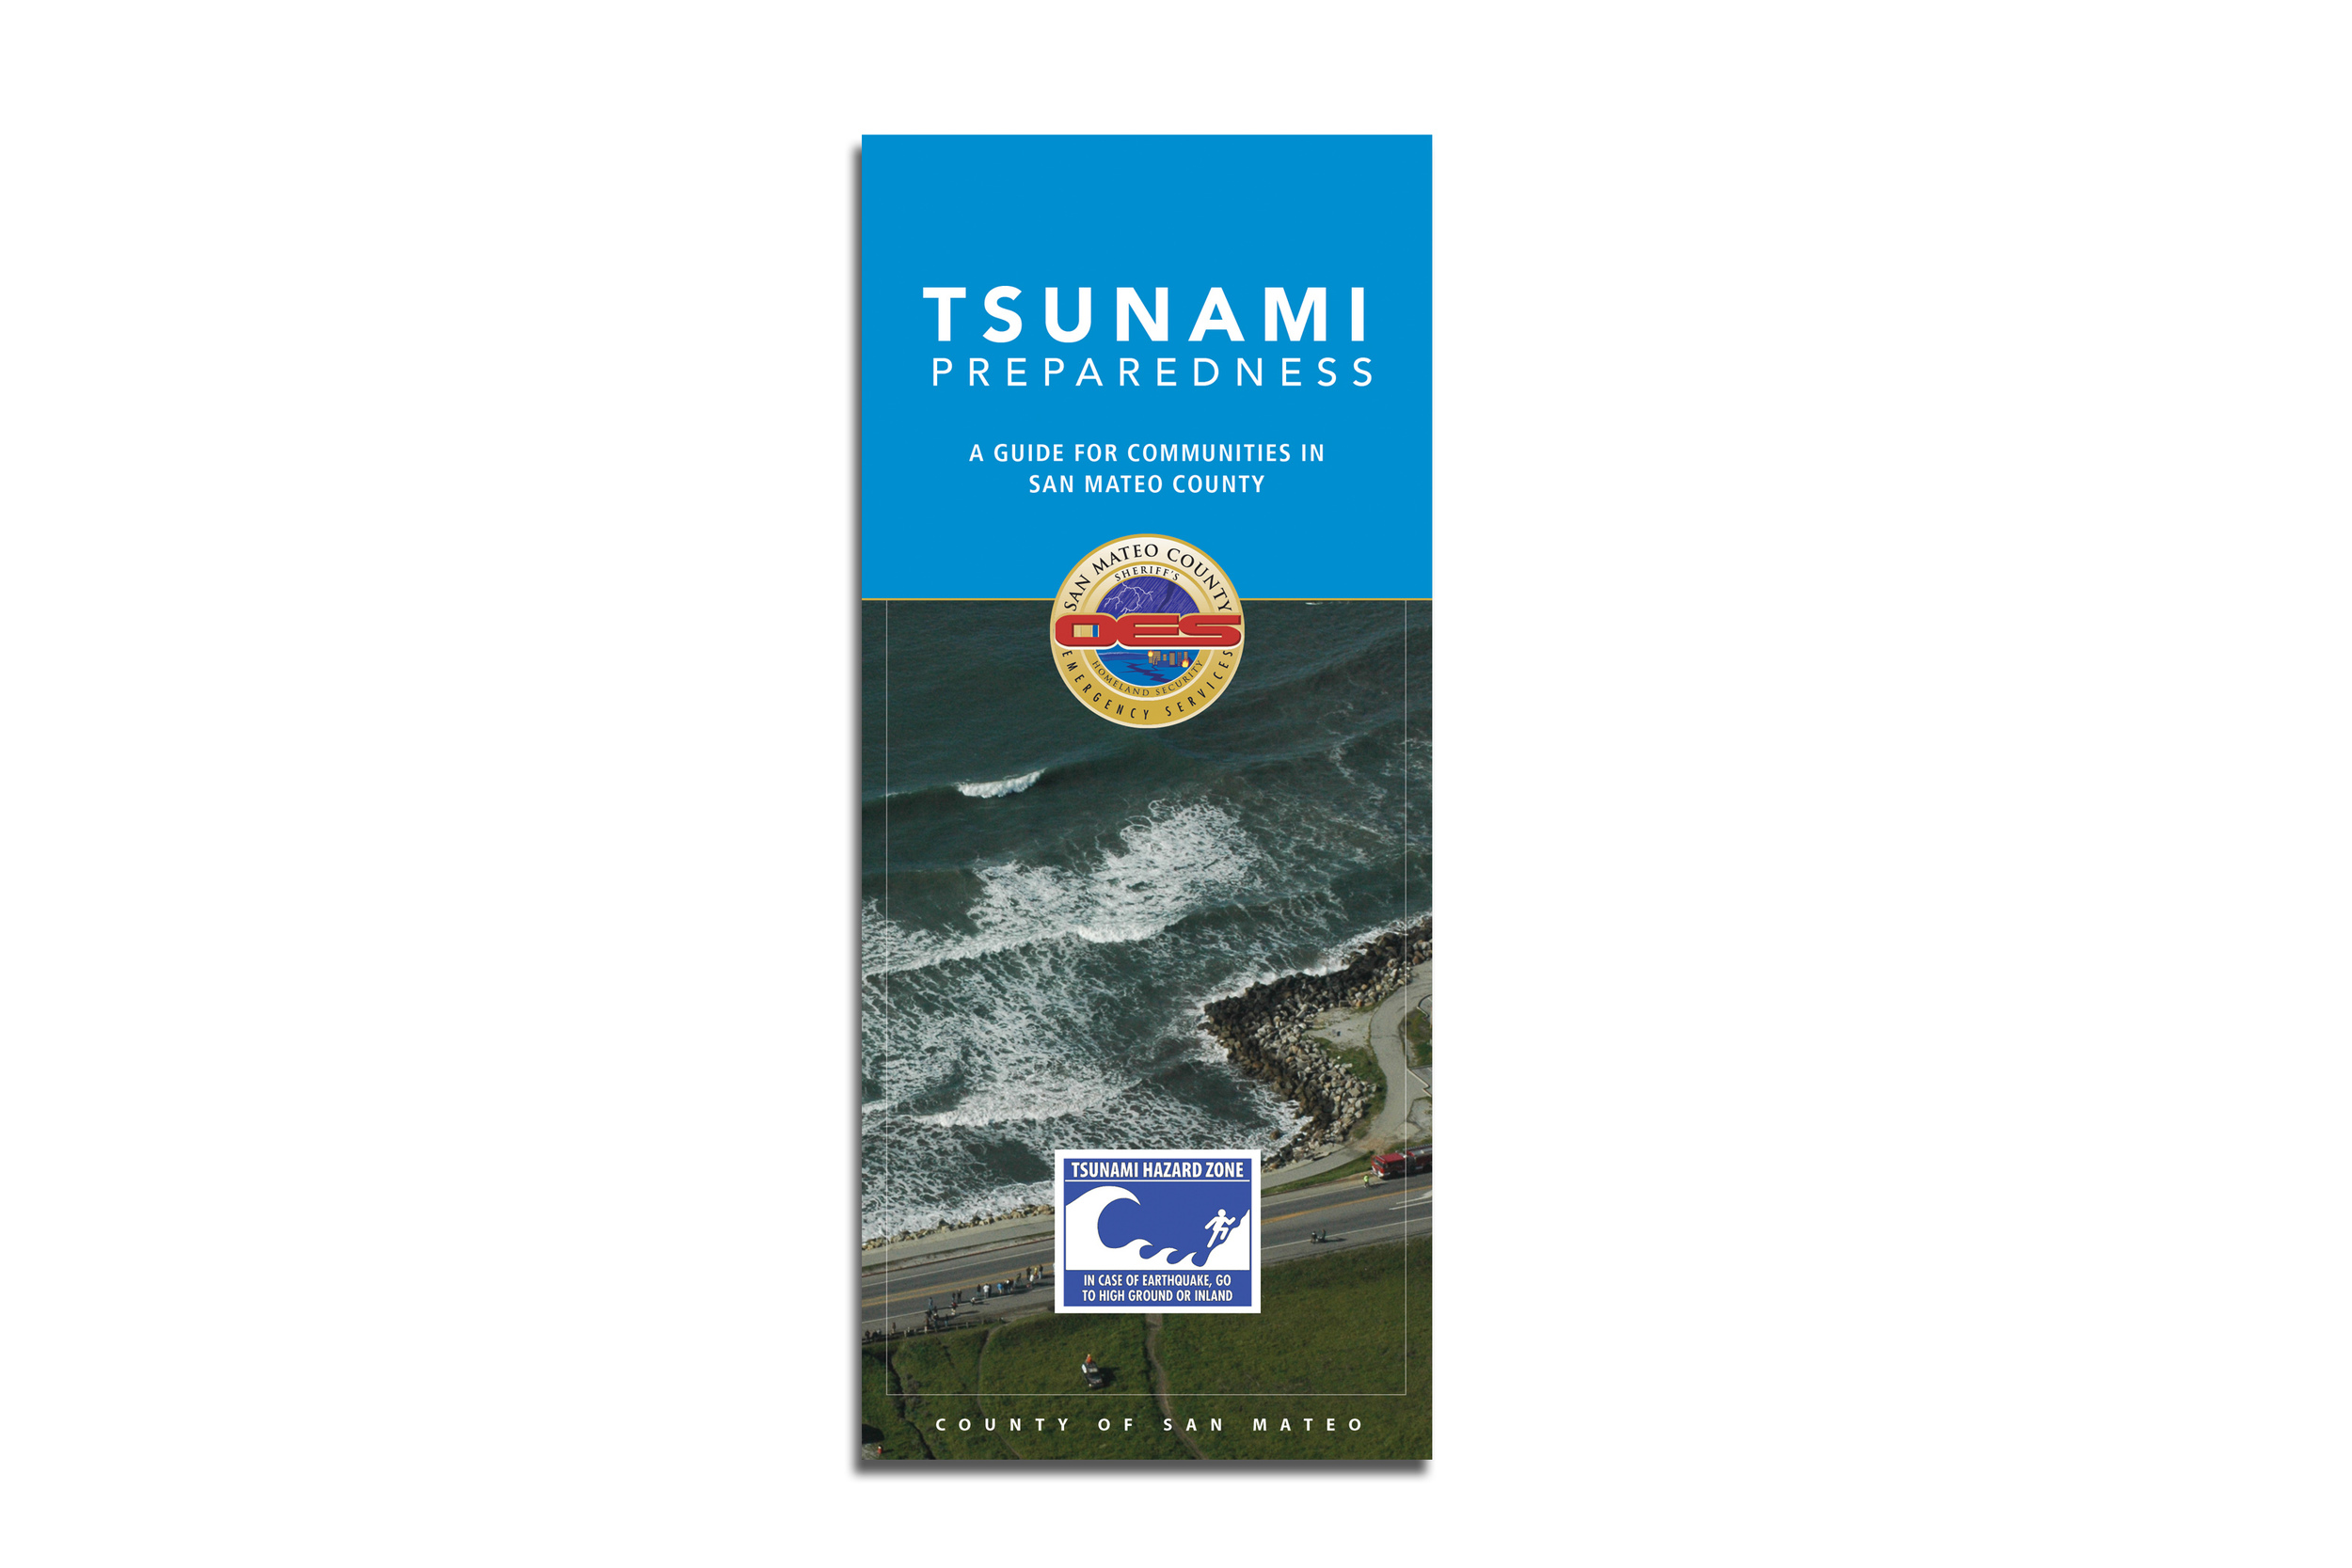 tsunami-brochure-cover.jpg